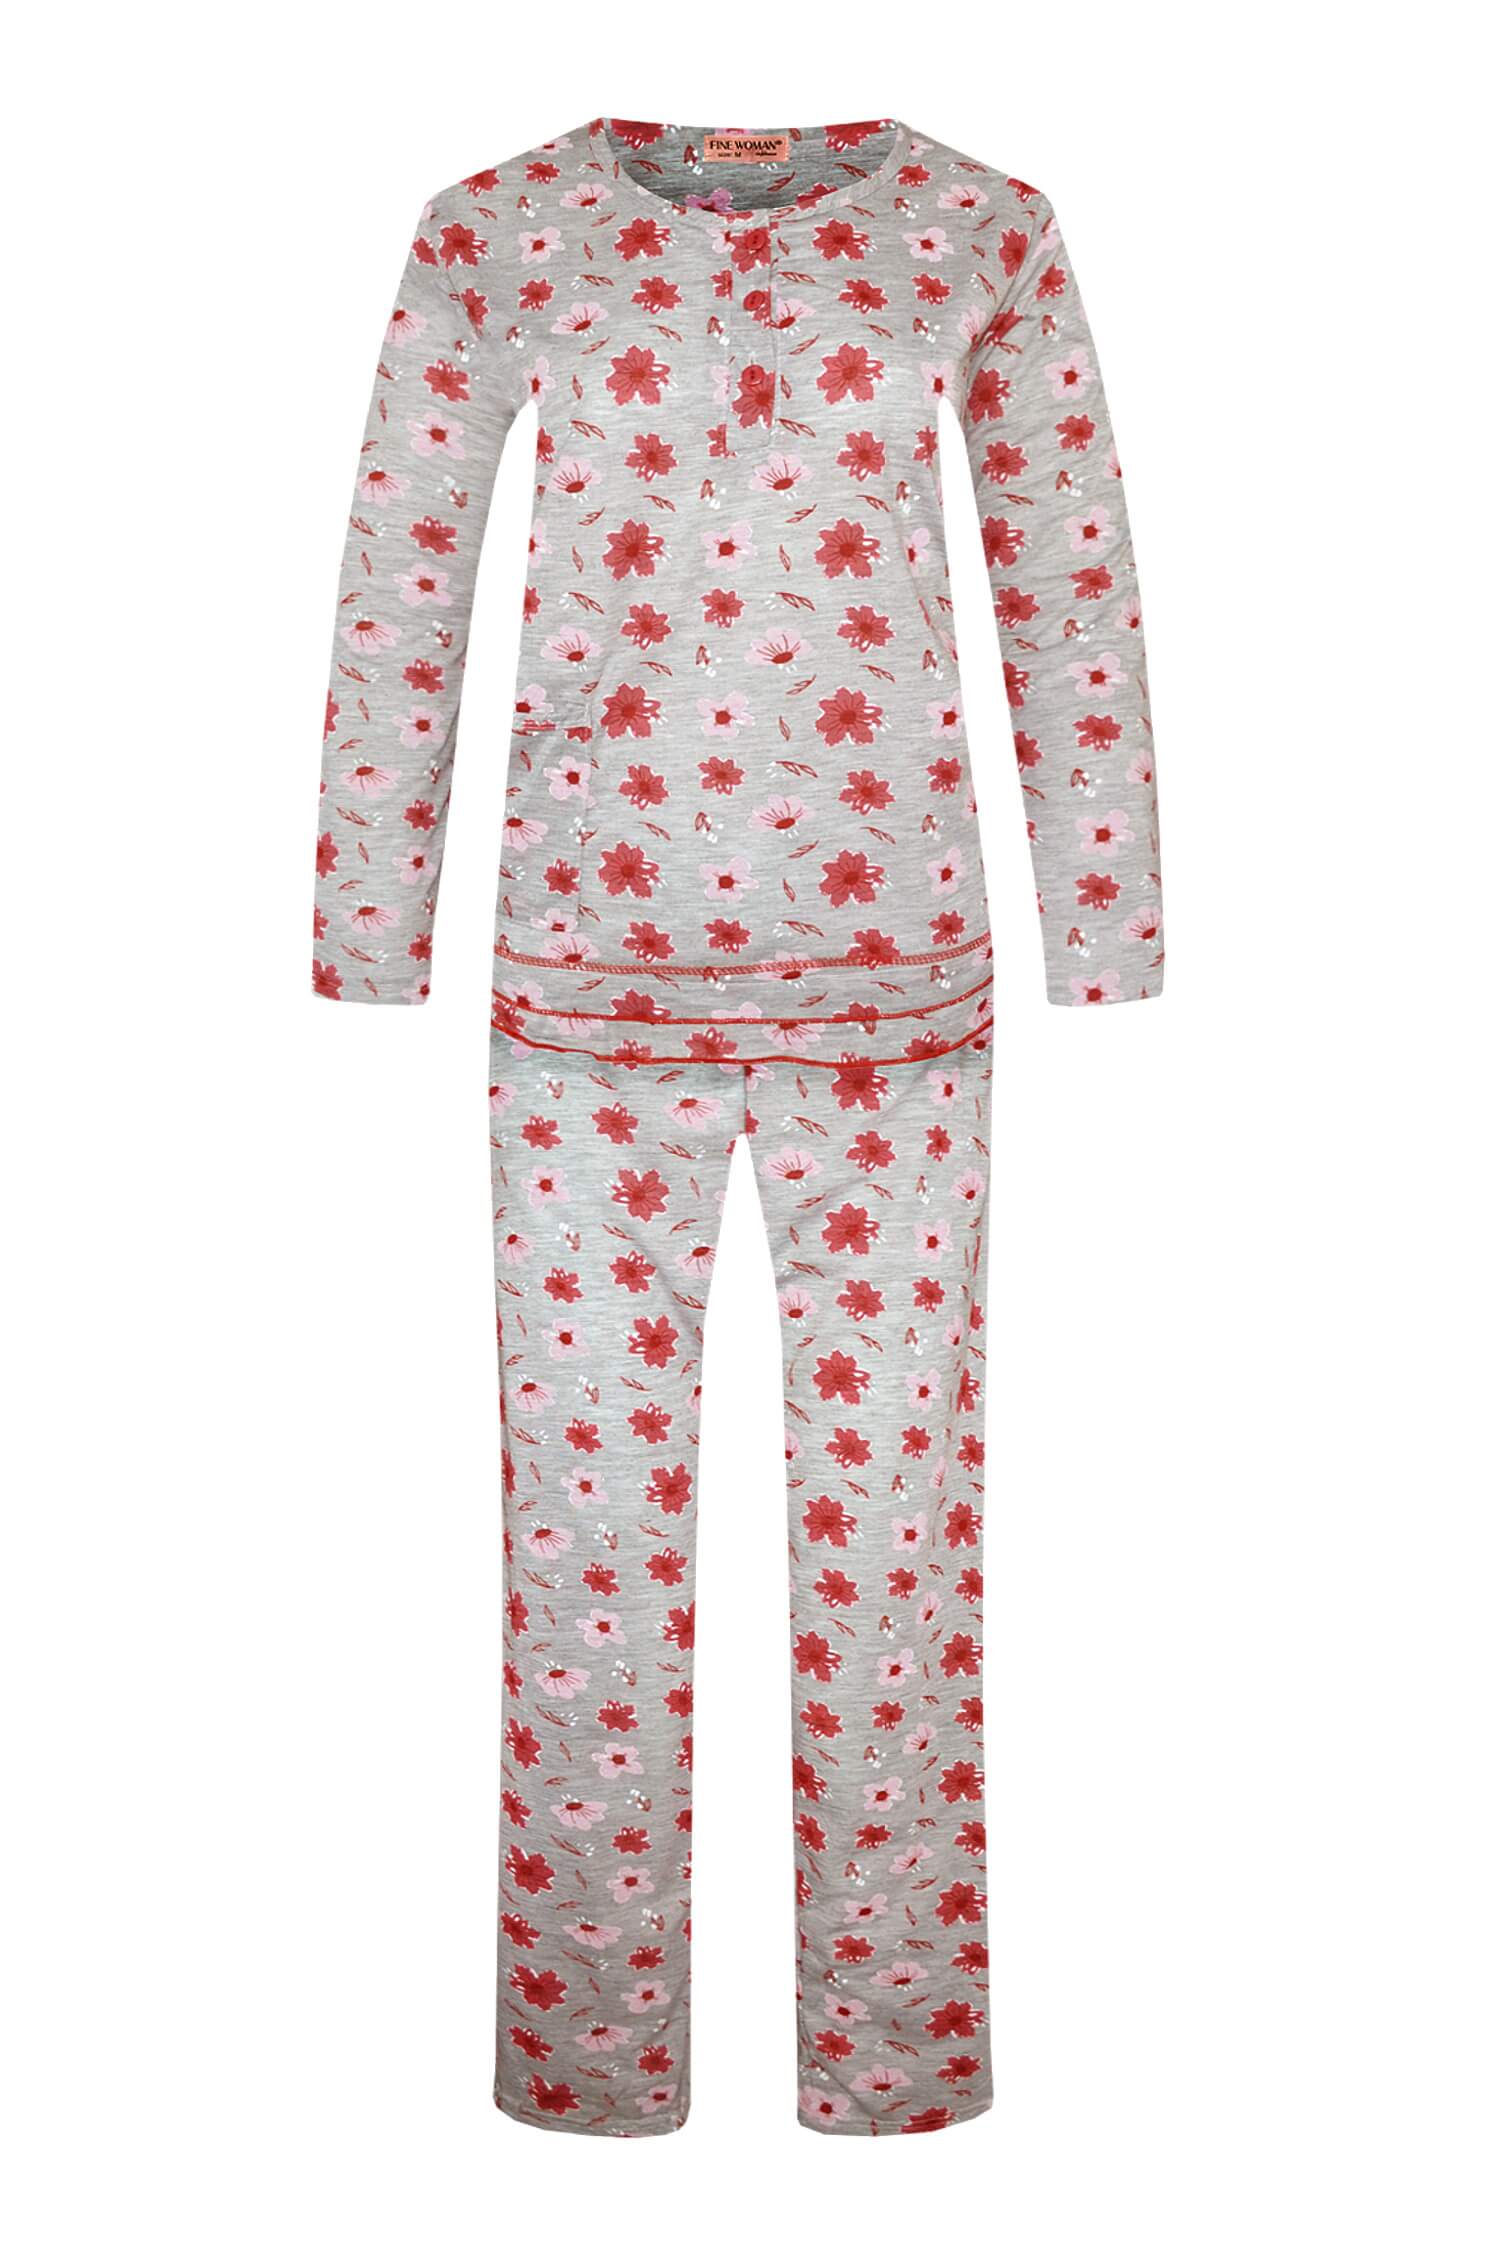 Arenda dámské dlouhé pyžamo 2297 3XL růžová